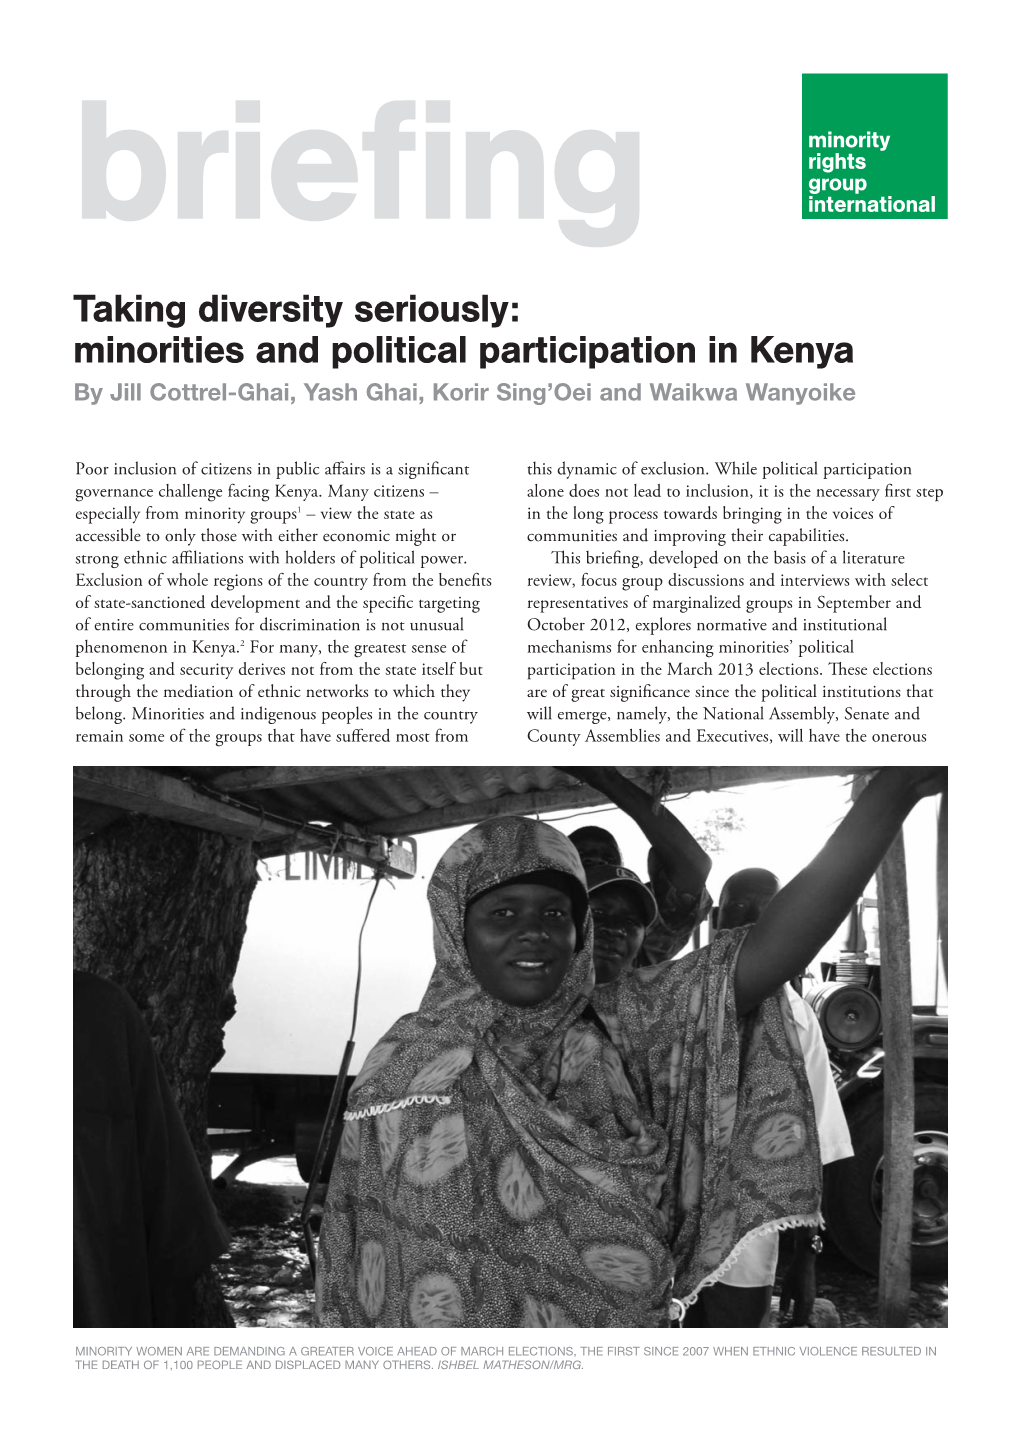 Minorities and Political Participation in Kenya by Jill Cottrel-Ghai, Yash Ghai, Korir Sing’Oei and Waikwa Wanyoike